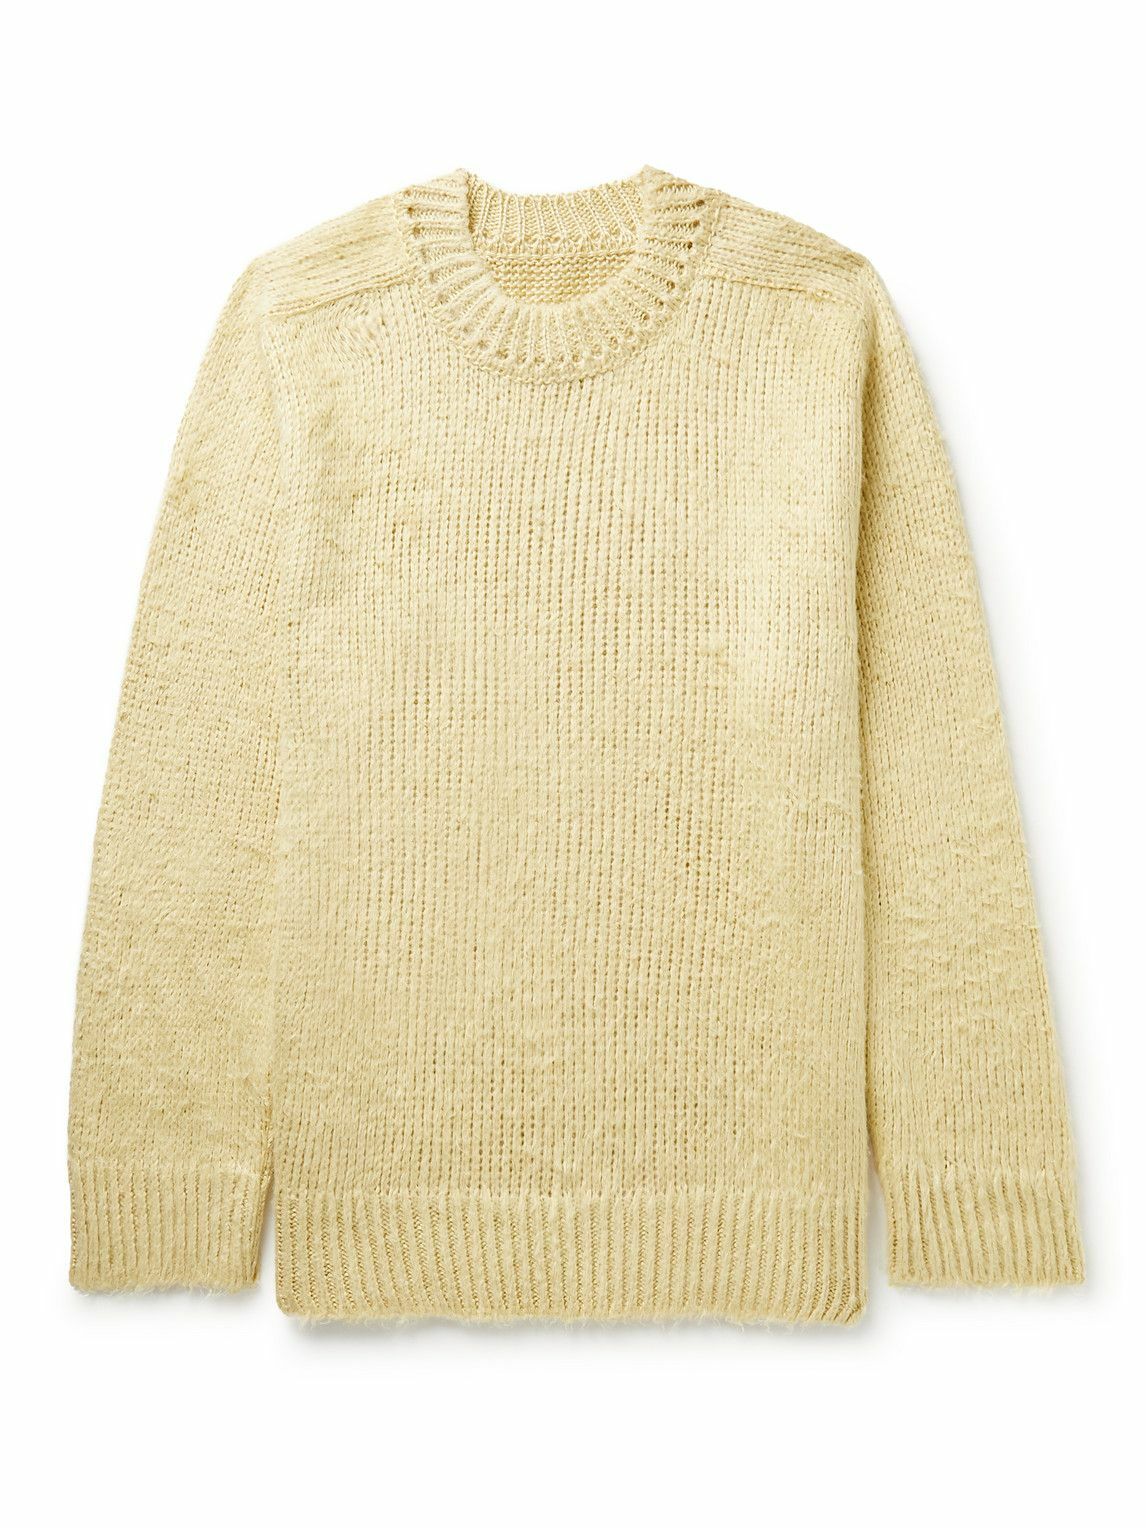 Maison Margiela - Linen Sweater - Yellow Maison Margiela